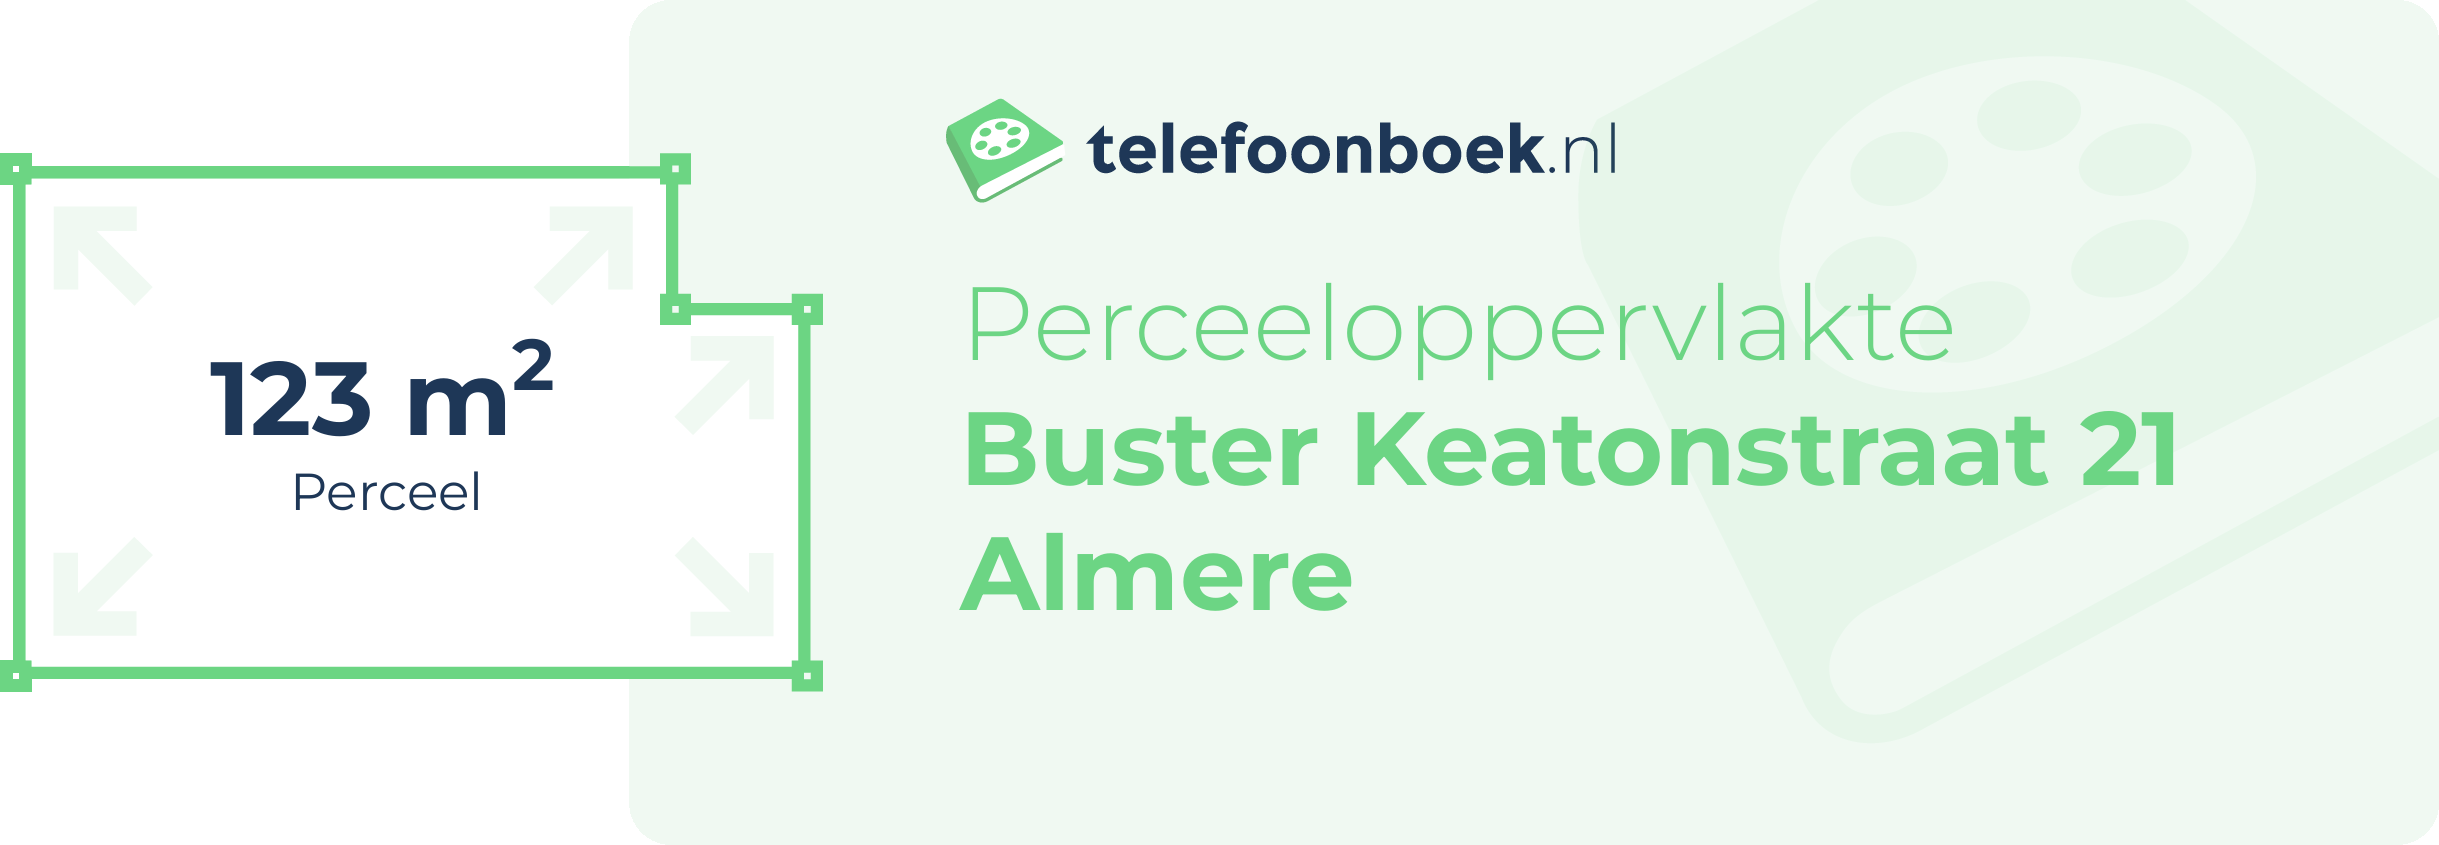 Perceeloppervlakte Buster Keatonstraat 21 Almere